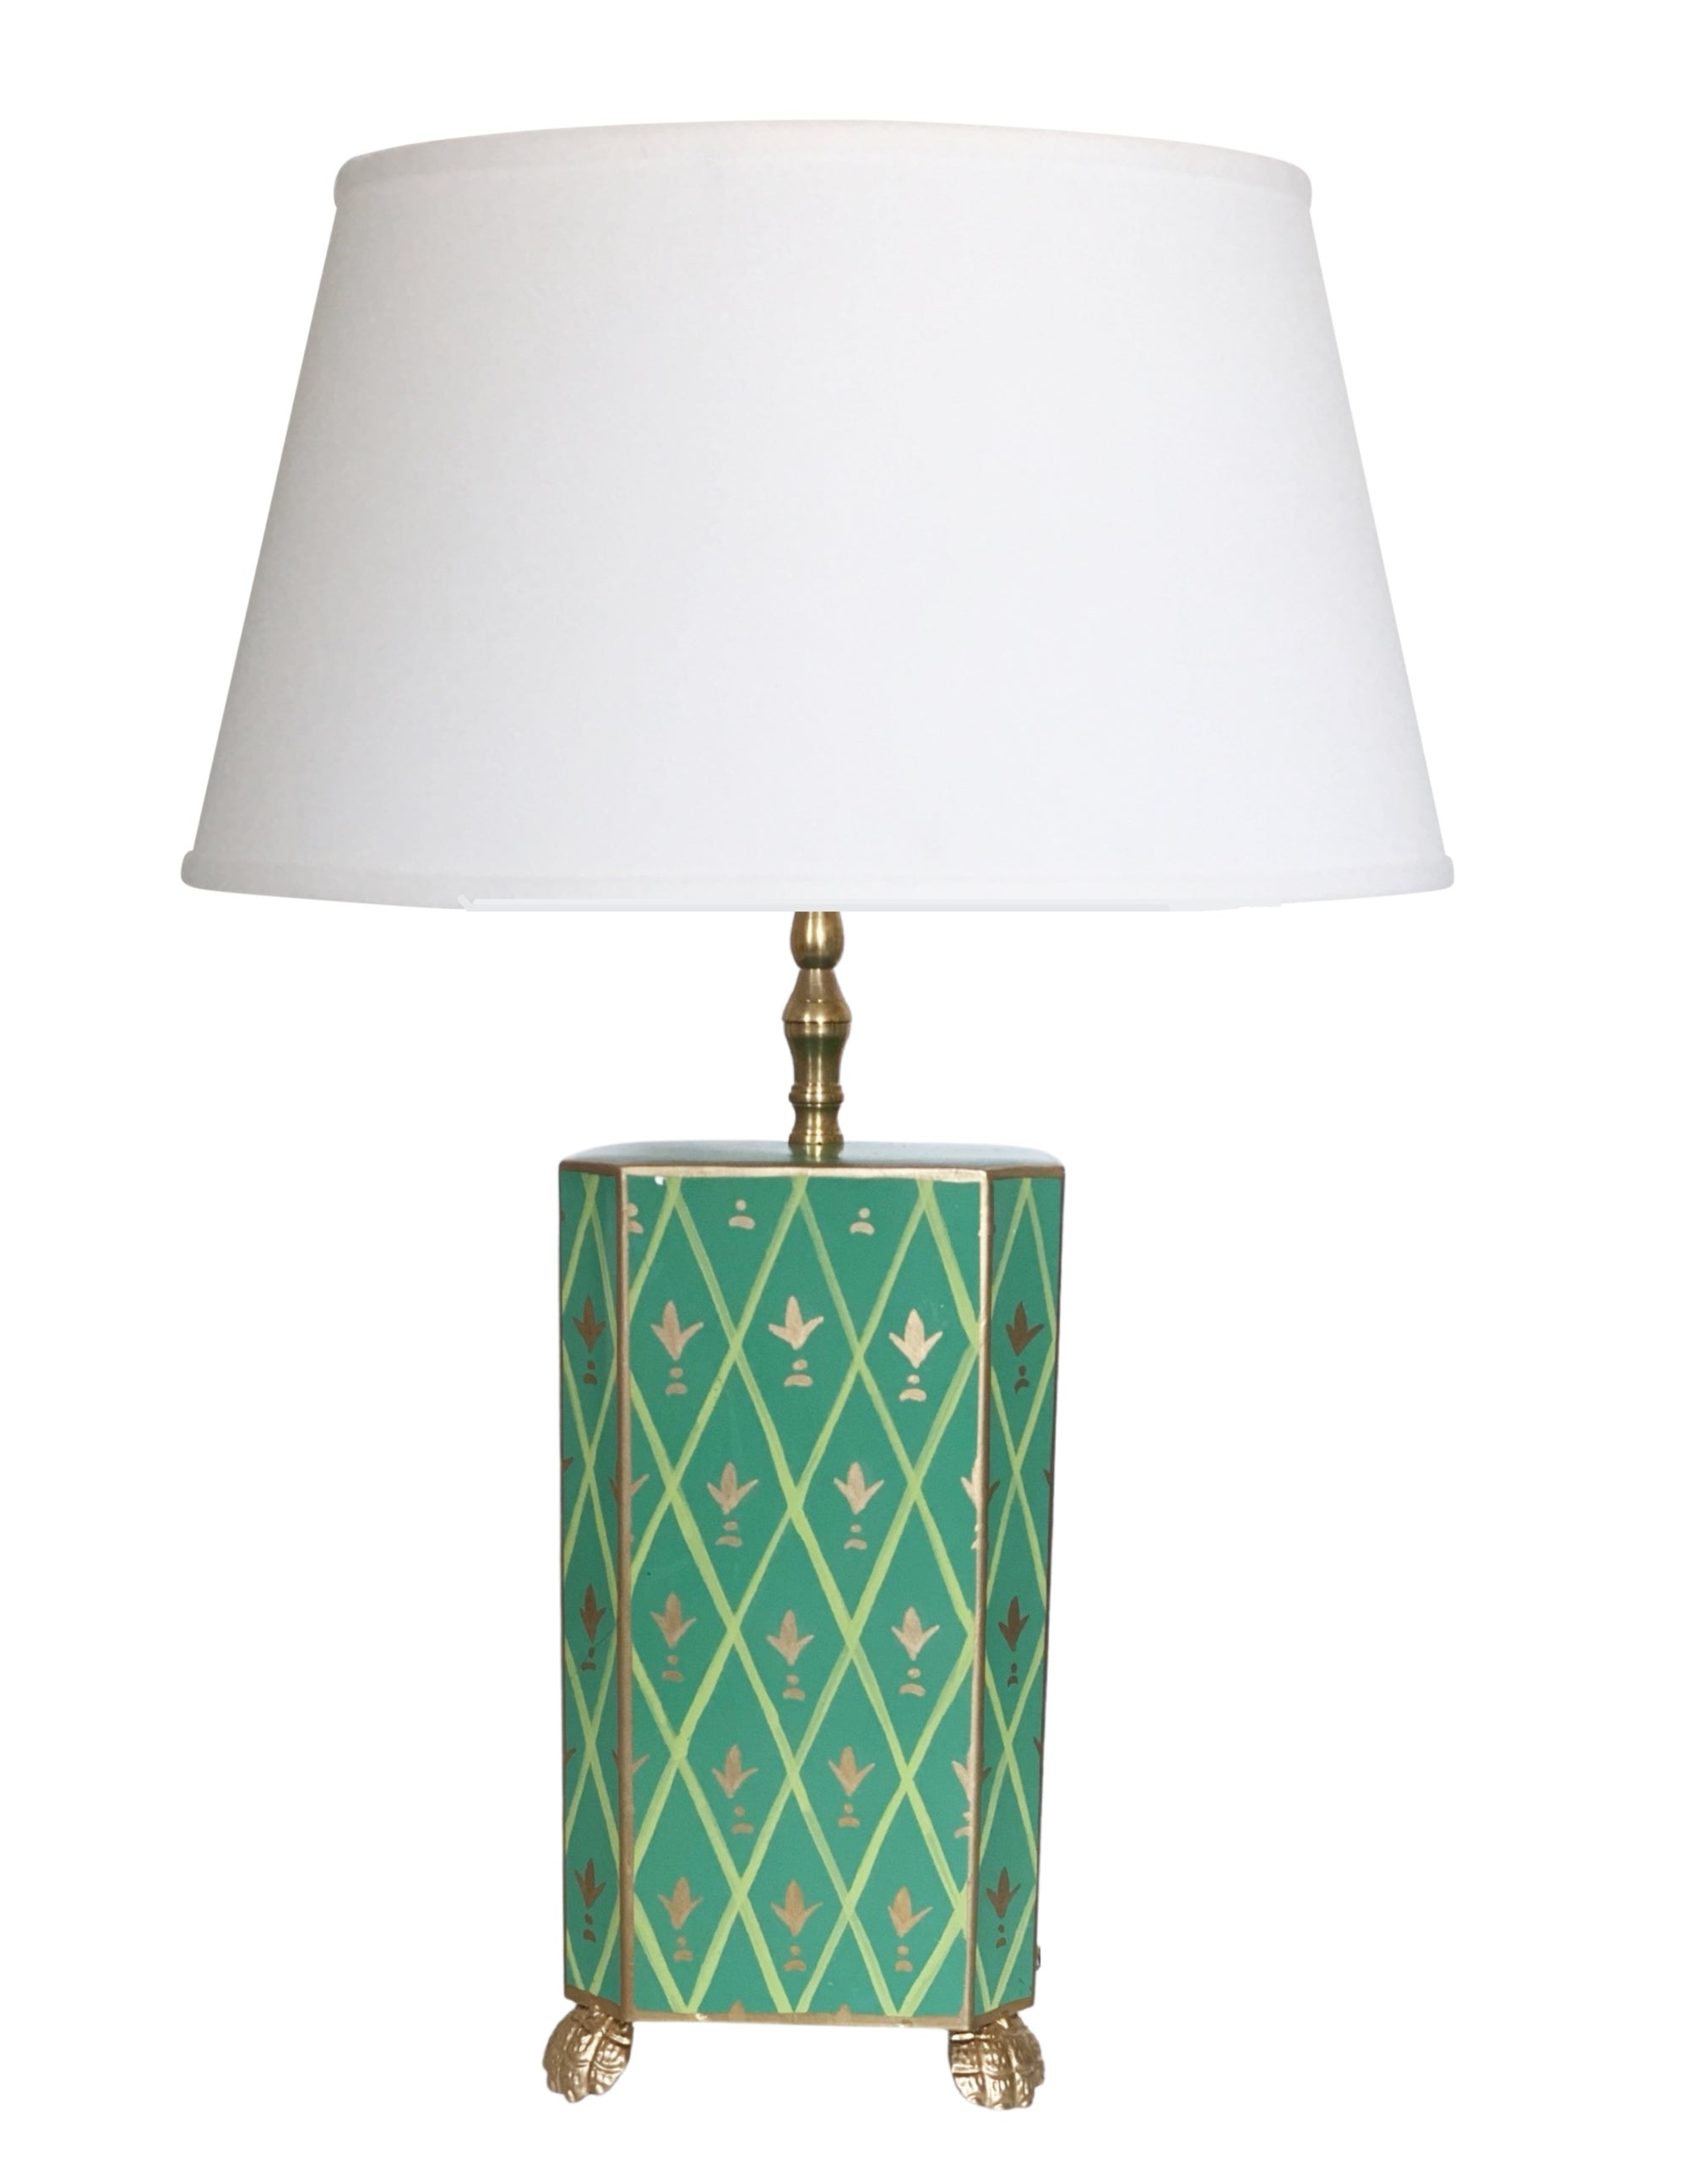 Dana Gibson Newport in Green Table Lamp